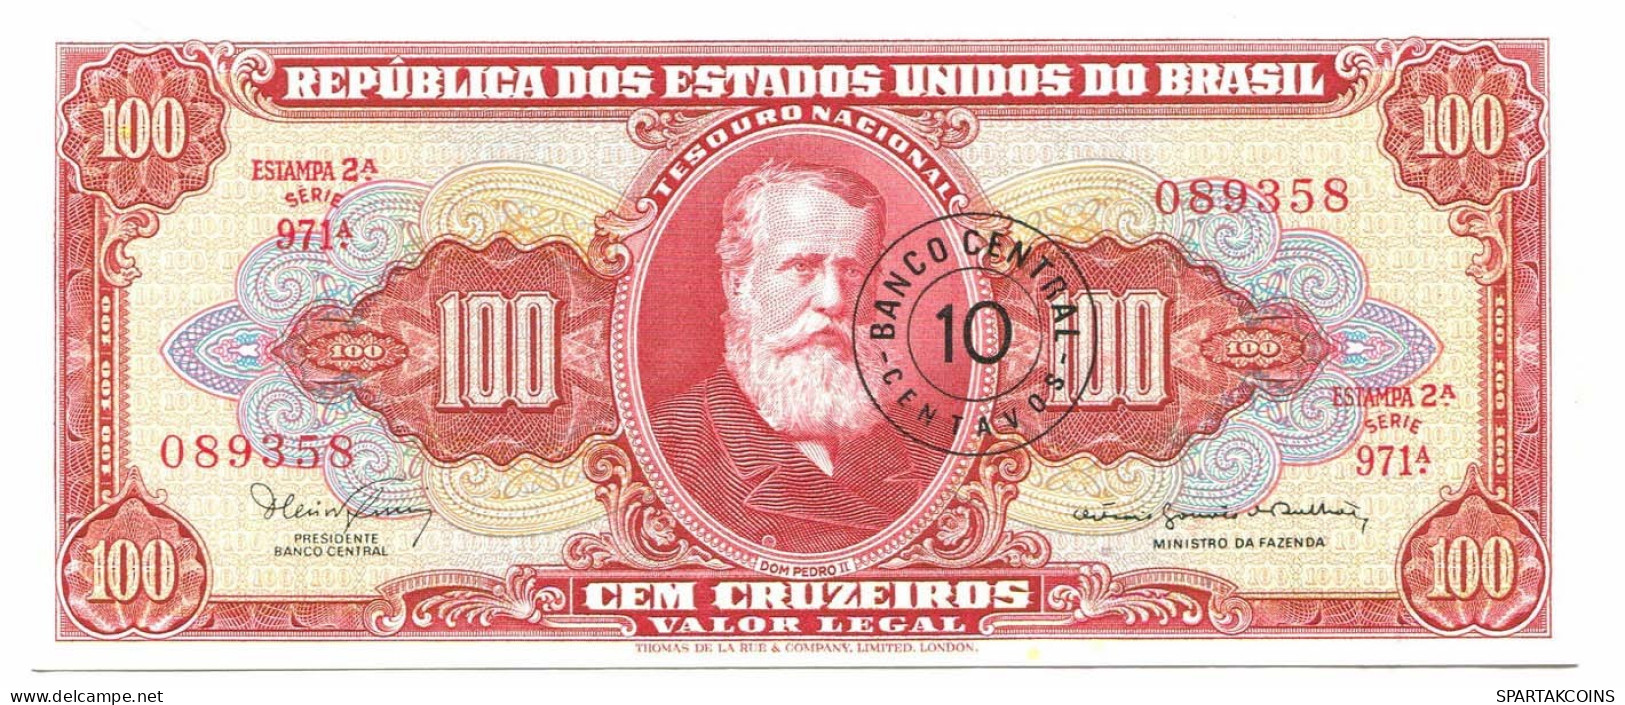 BRASIL 100 CRUZEIROS 1966 SERIE 971A UNC Paper Money Banknote #P10851.4 - Lokale Ausgaben